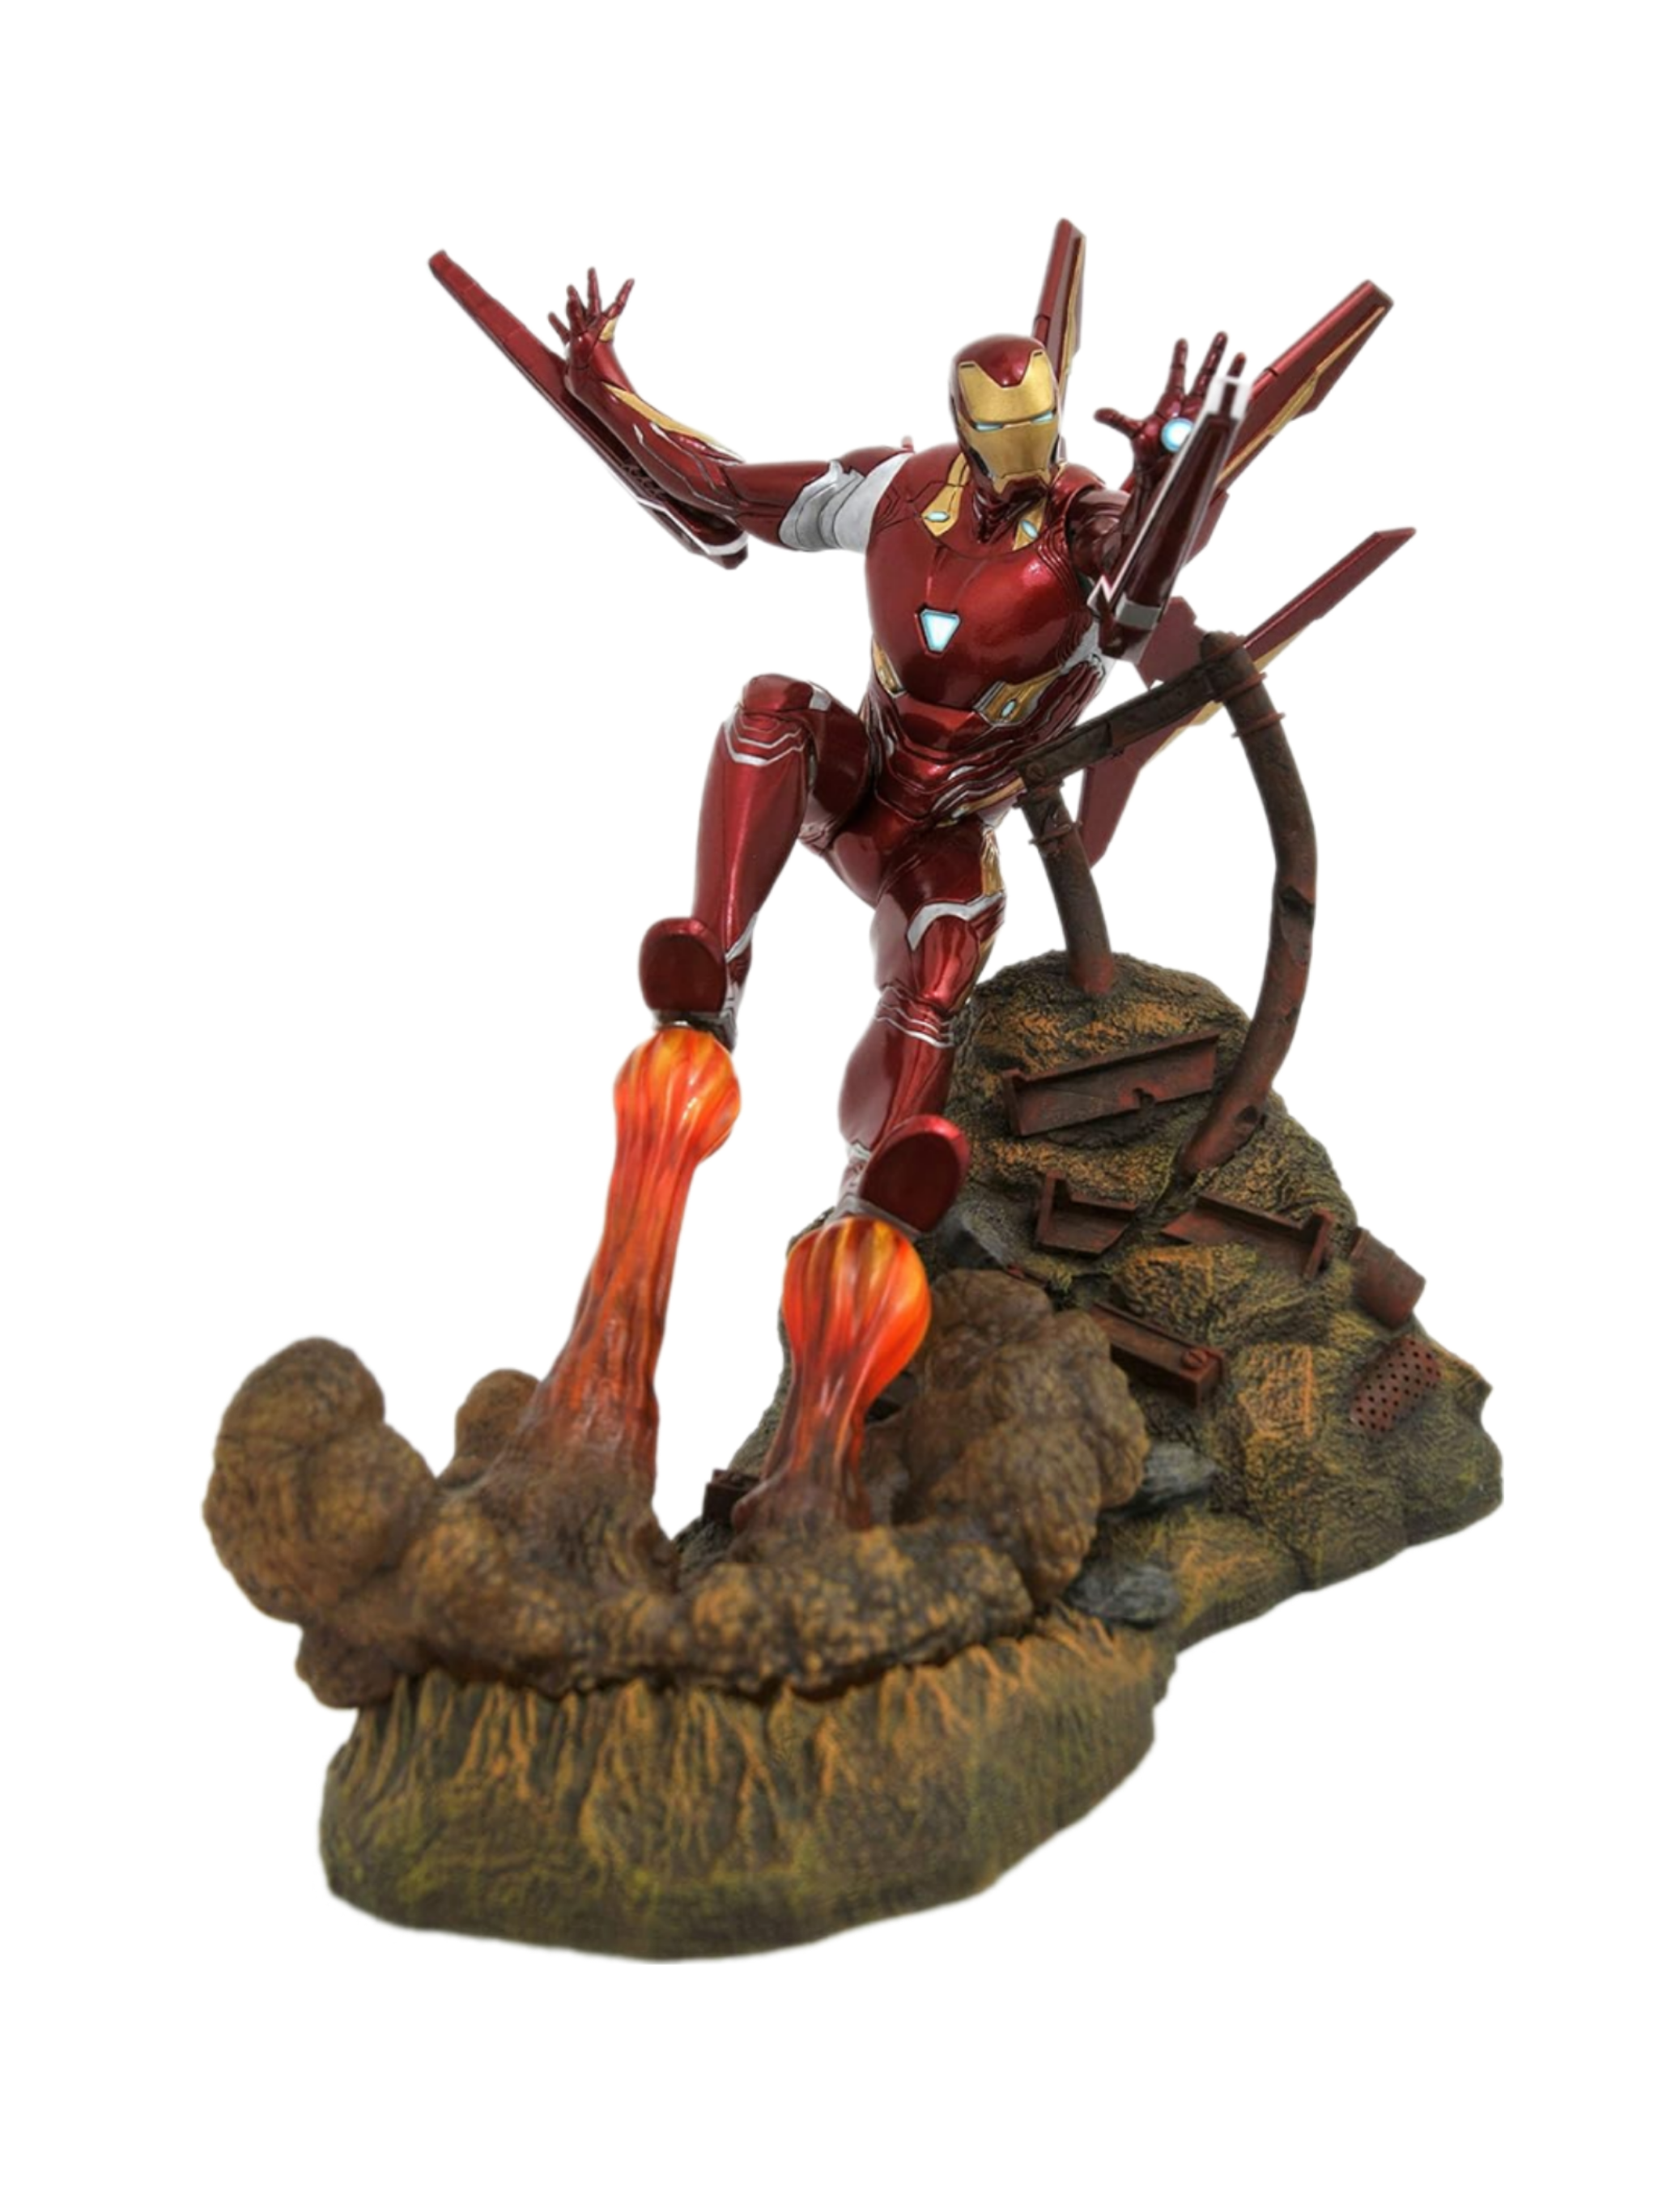 Avengers Infinity War Marvel Movie Premier Collection Statue Iron Man MK50 30 cm